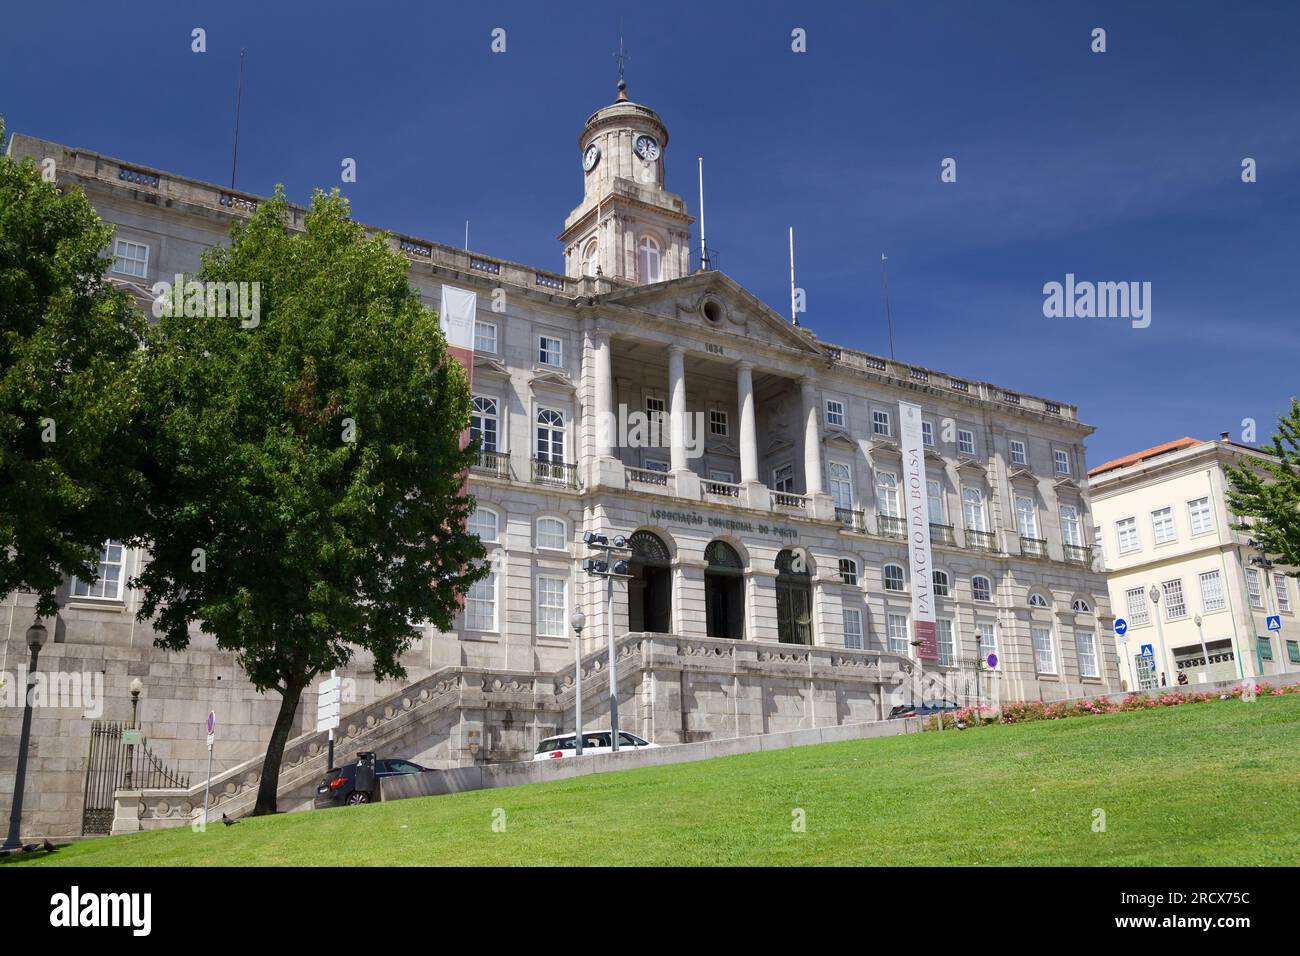 Palacio da bolsa -Fotos und -Bildmaterial in hoher Auflösung – Alamy